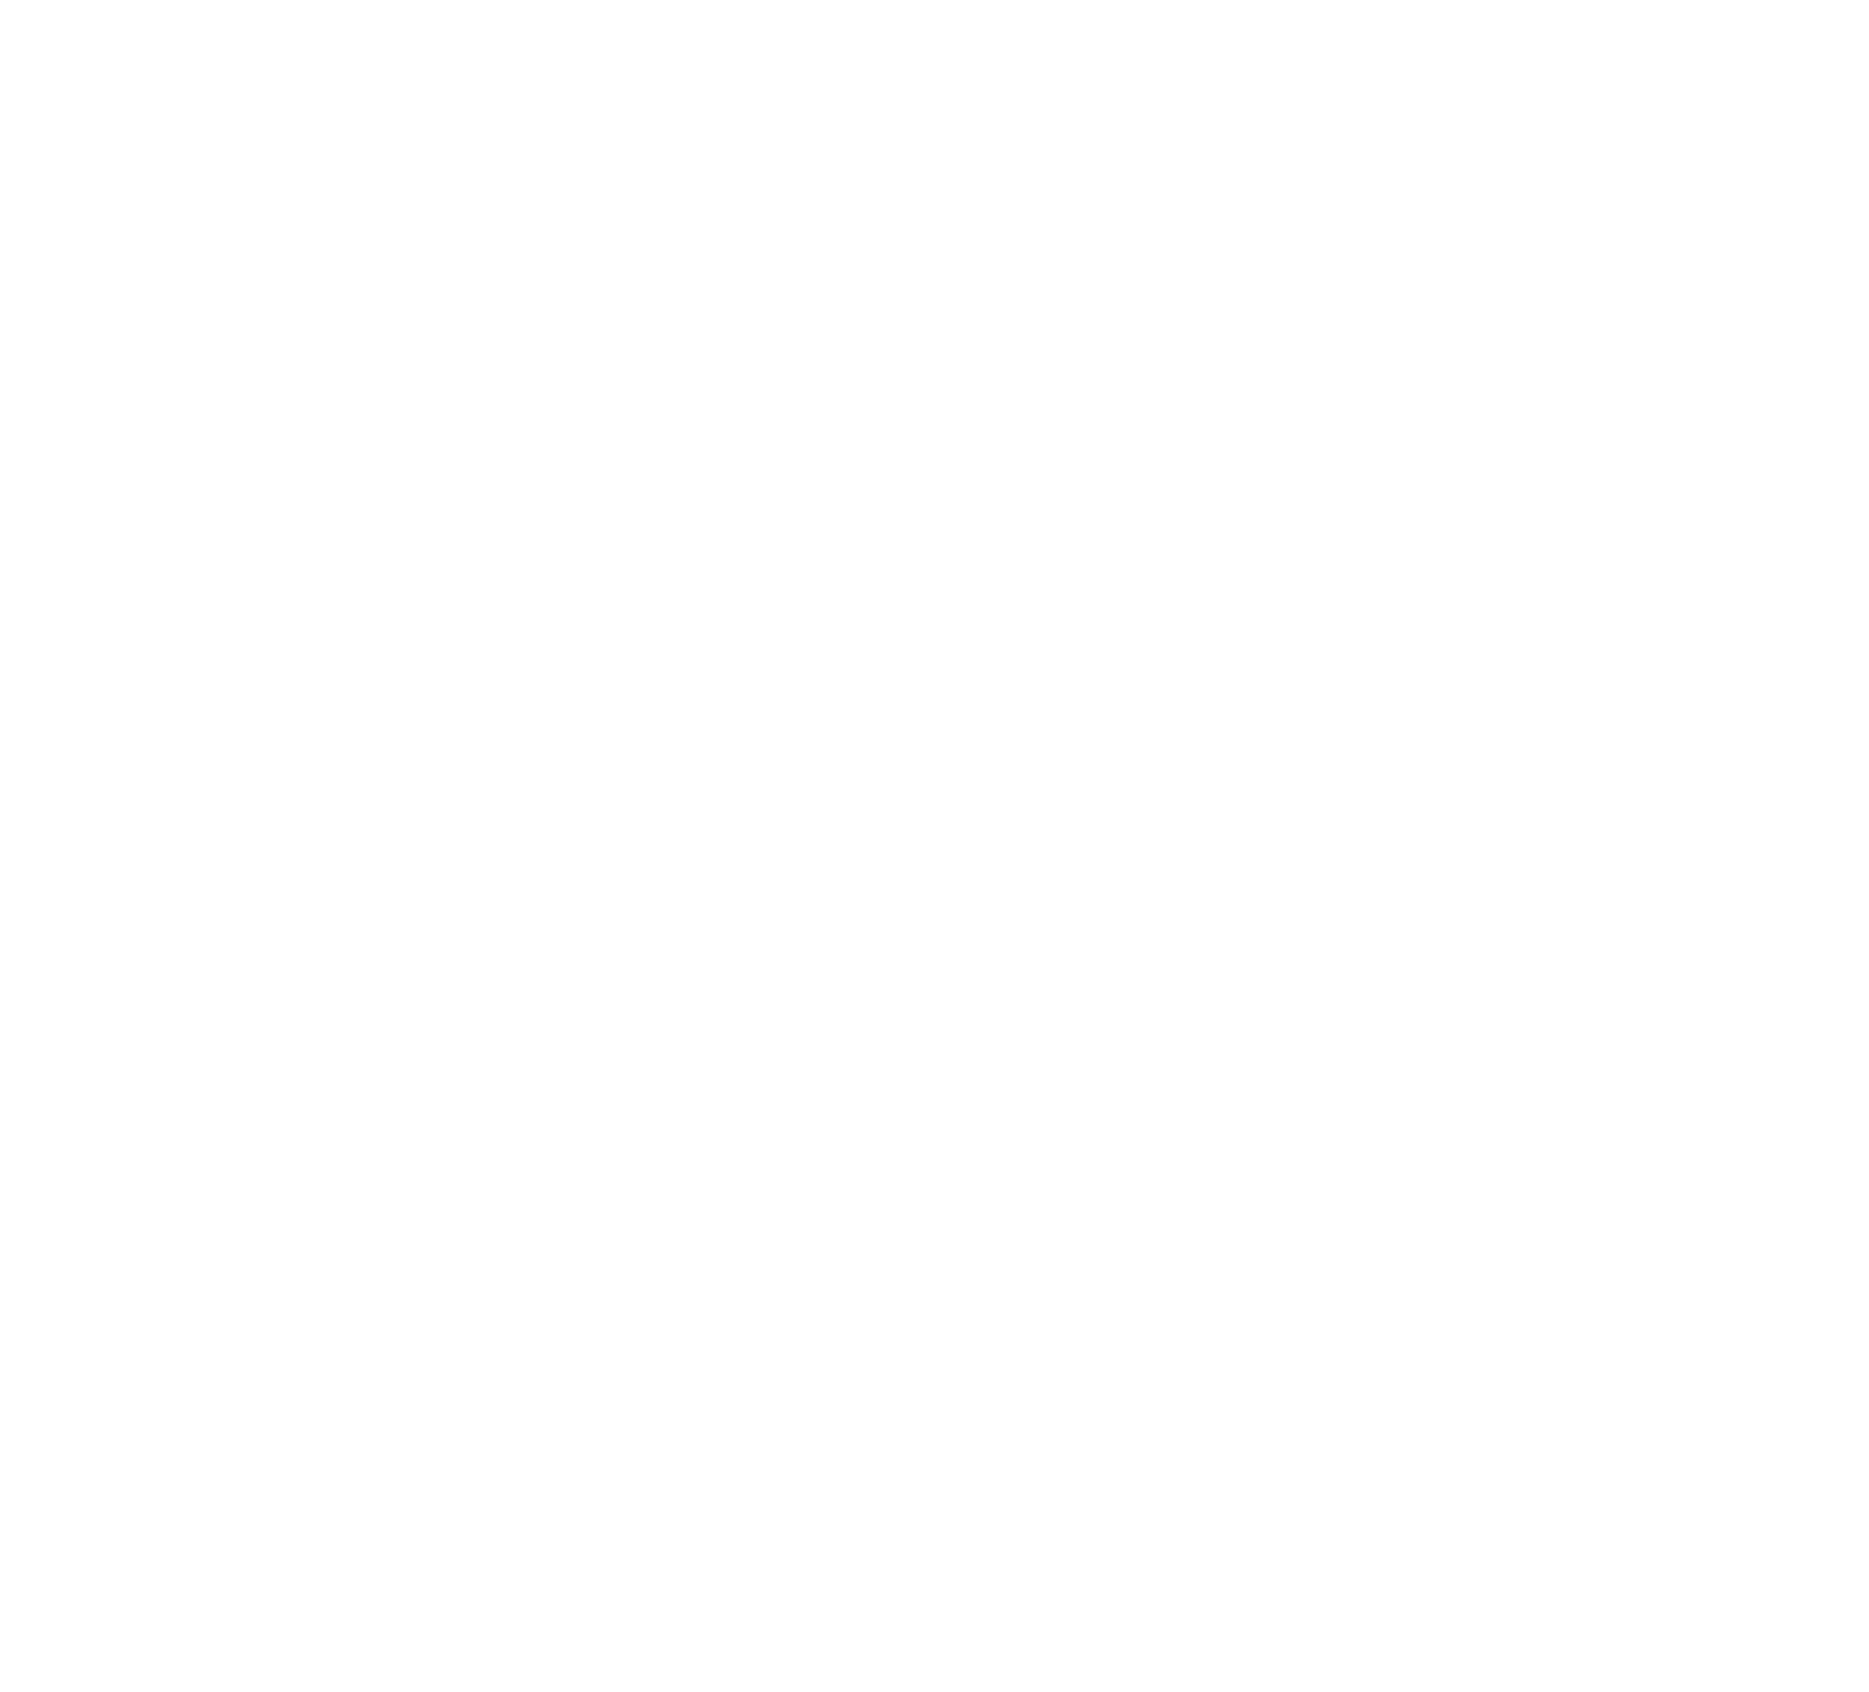 Matt & Tali PHOTOGRAPHY